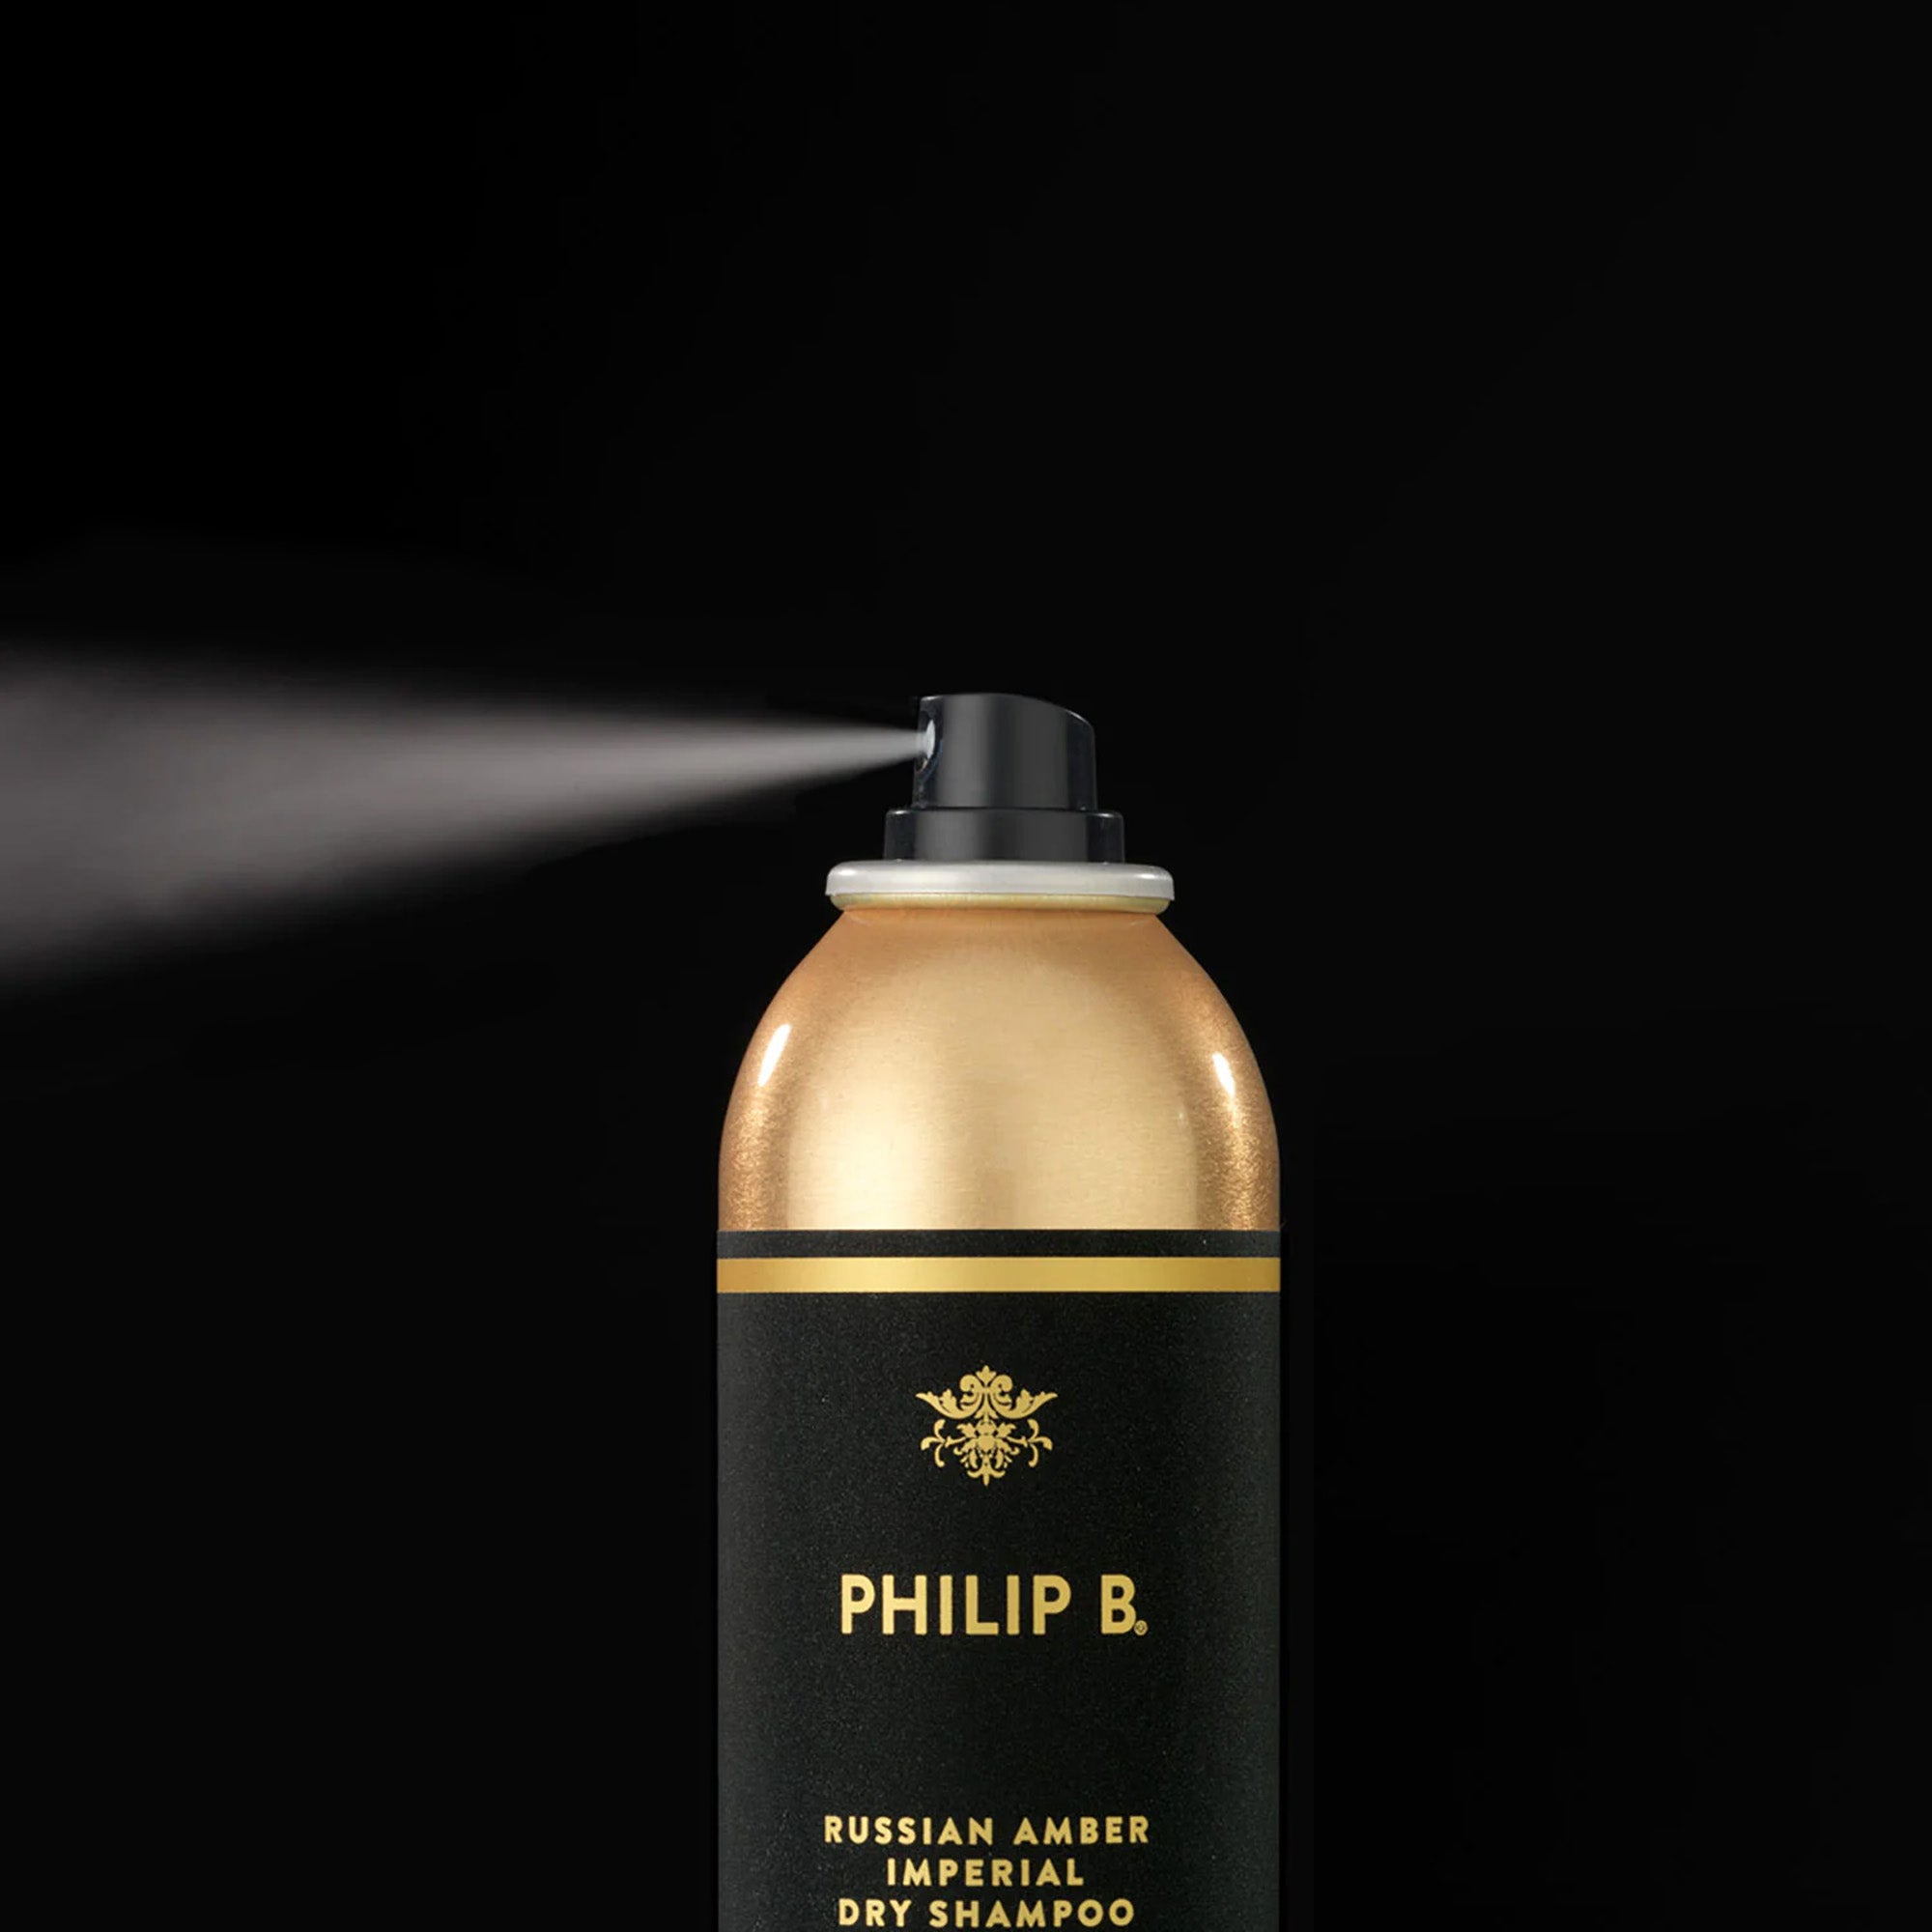 Philip B Russian Amber Imperial Dry Shampoo / 8.OZ